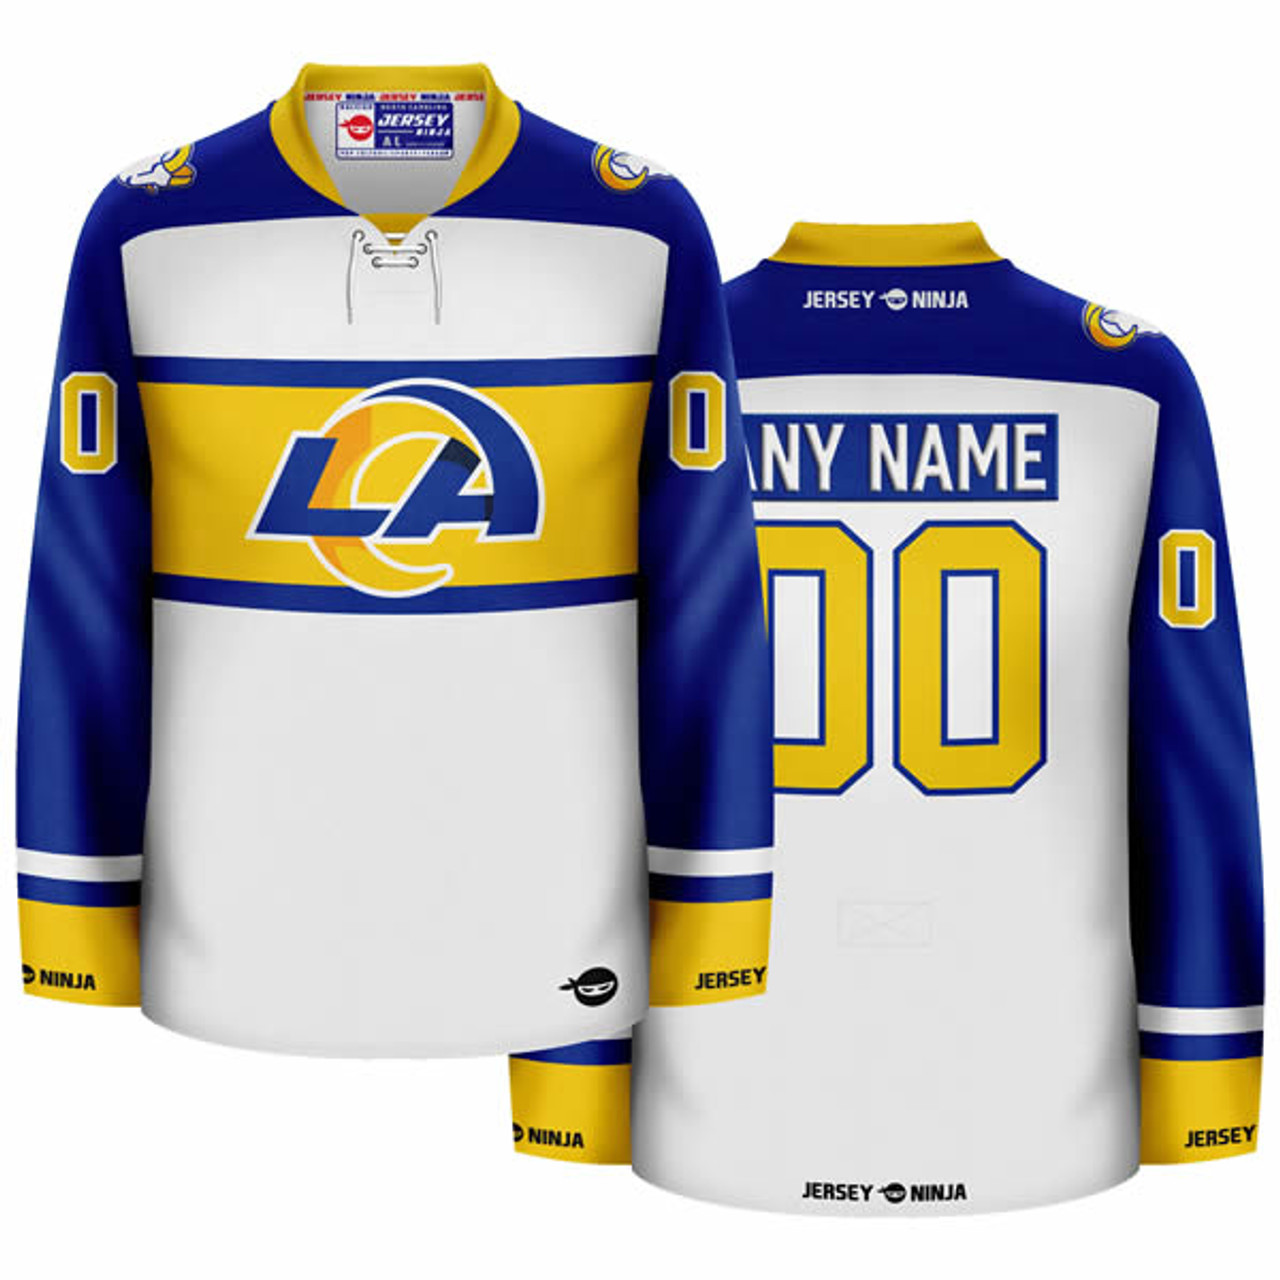 Jersey Ninja - Los Angeles Rams White Hockey Jersey